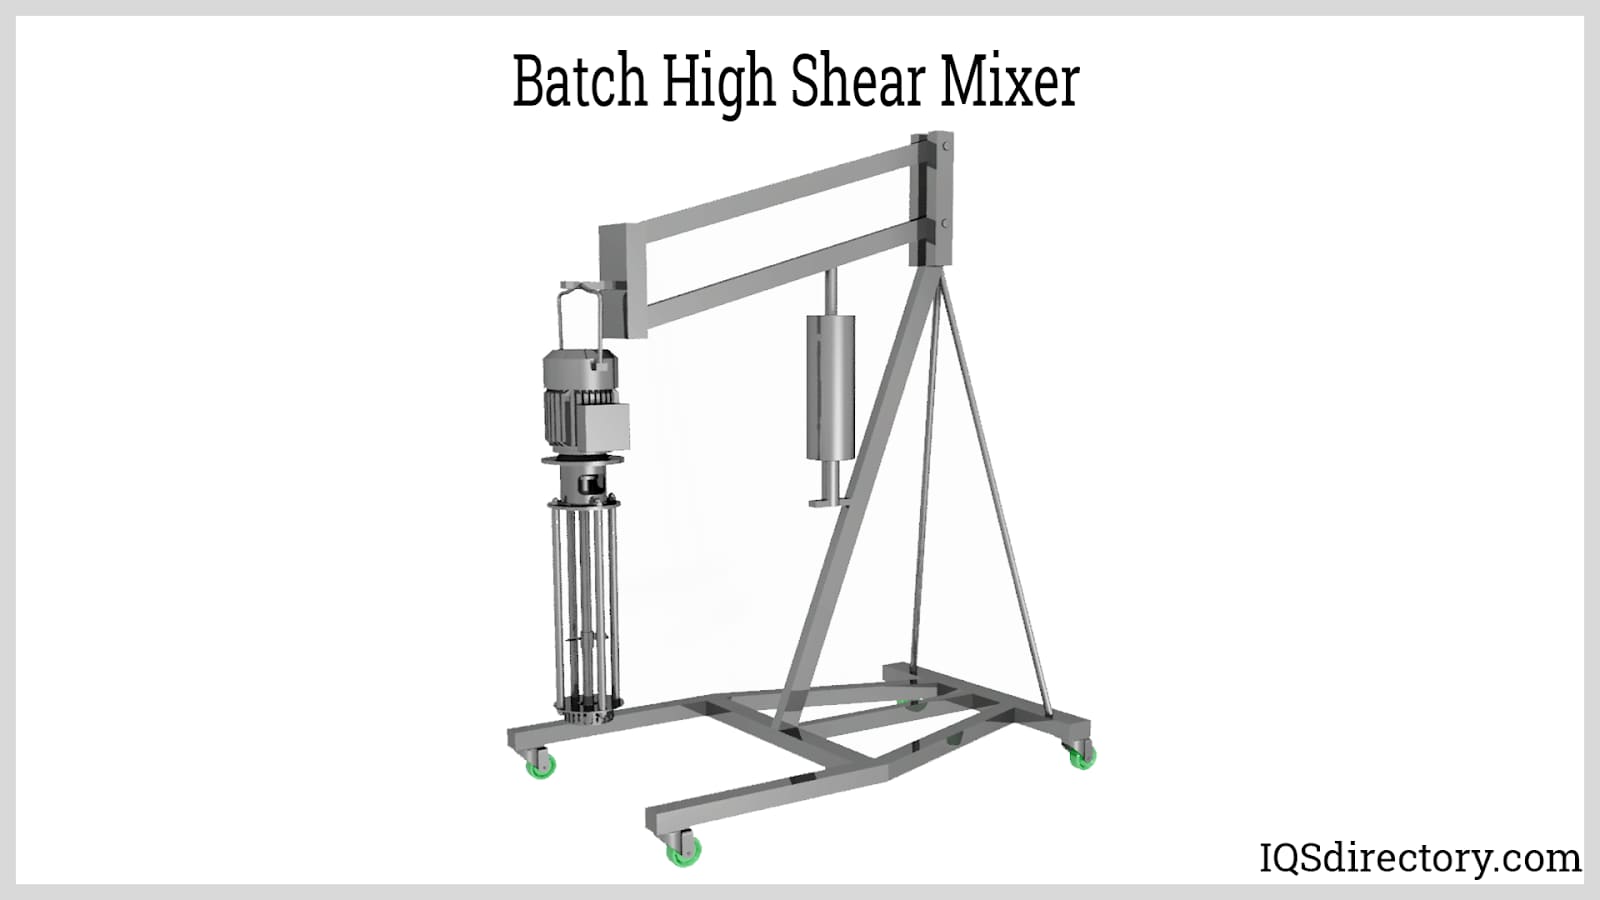 Batch High Shear Mixer